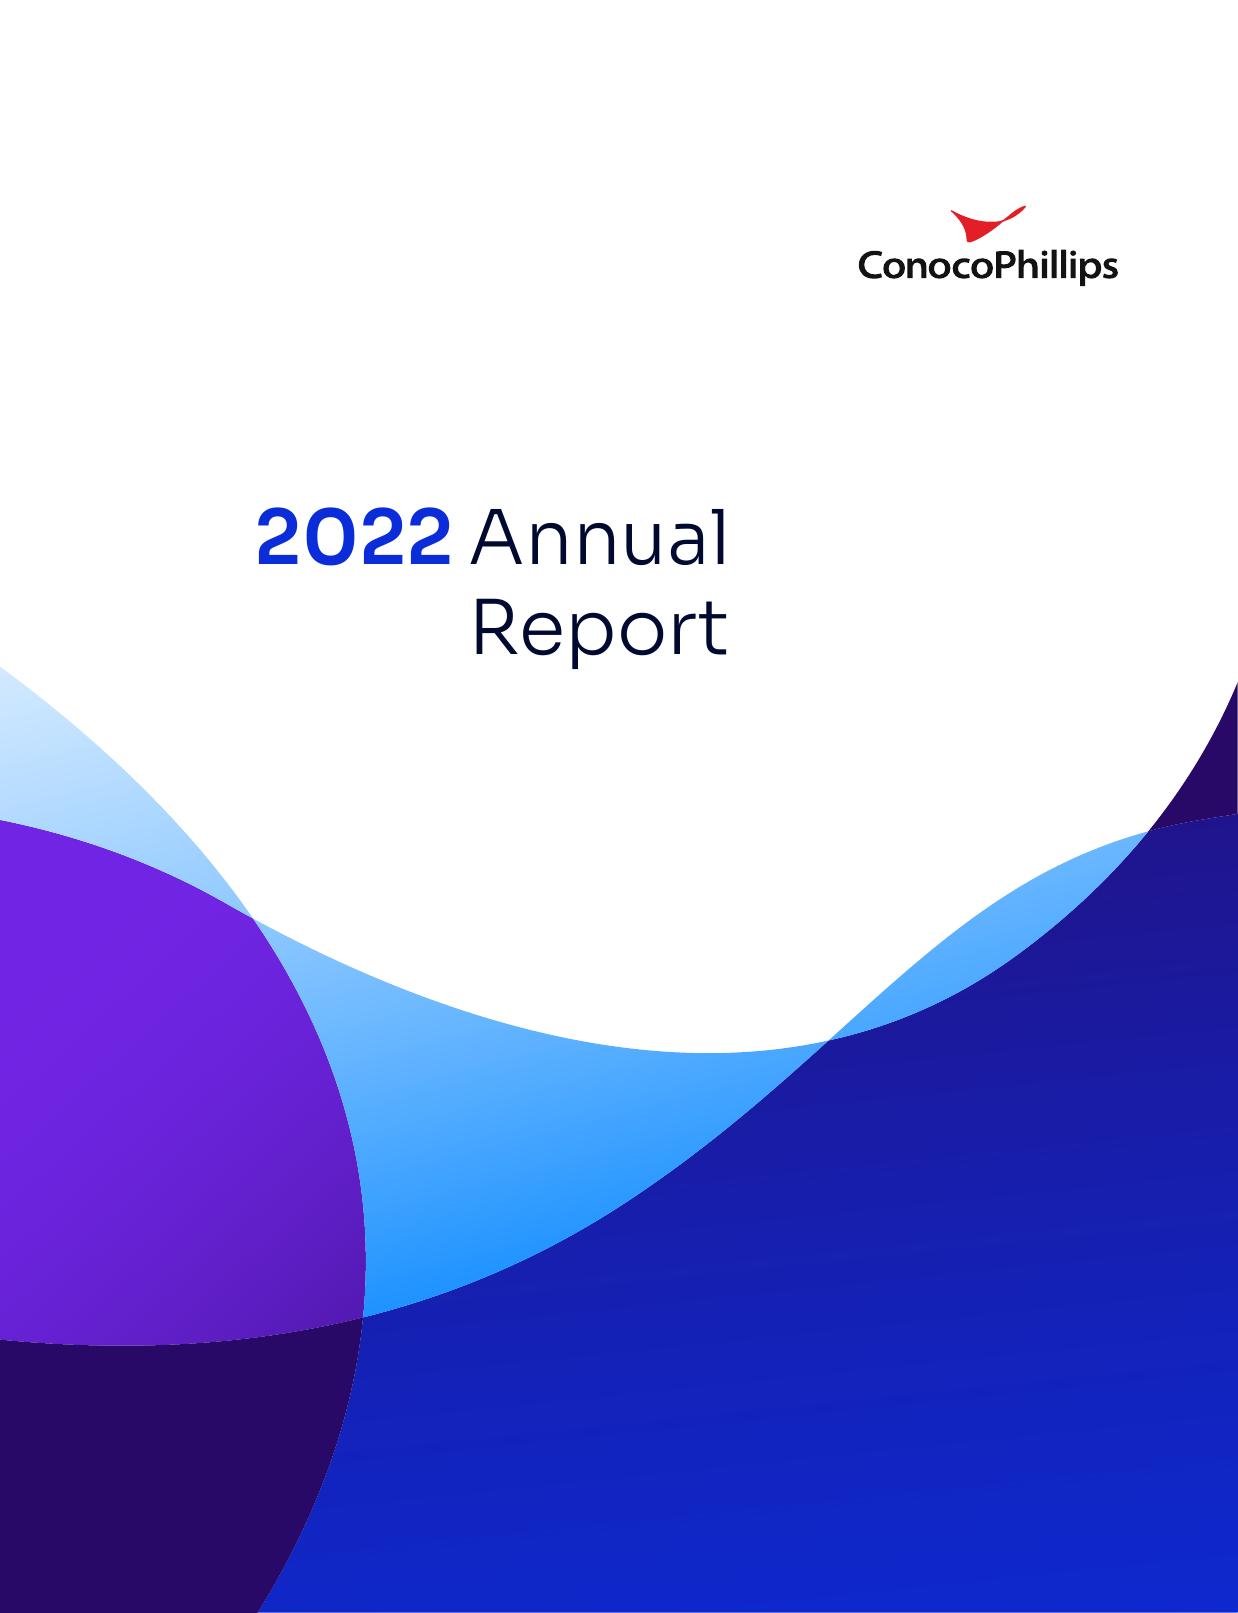 WATERSTONEHC 2022 Annual Report